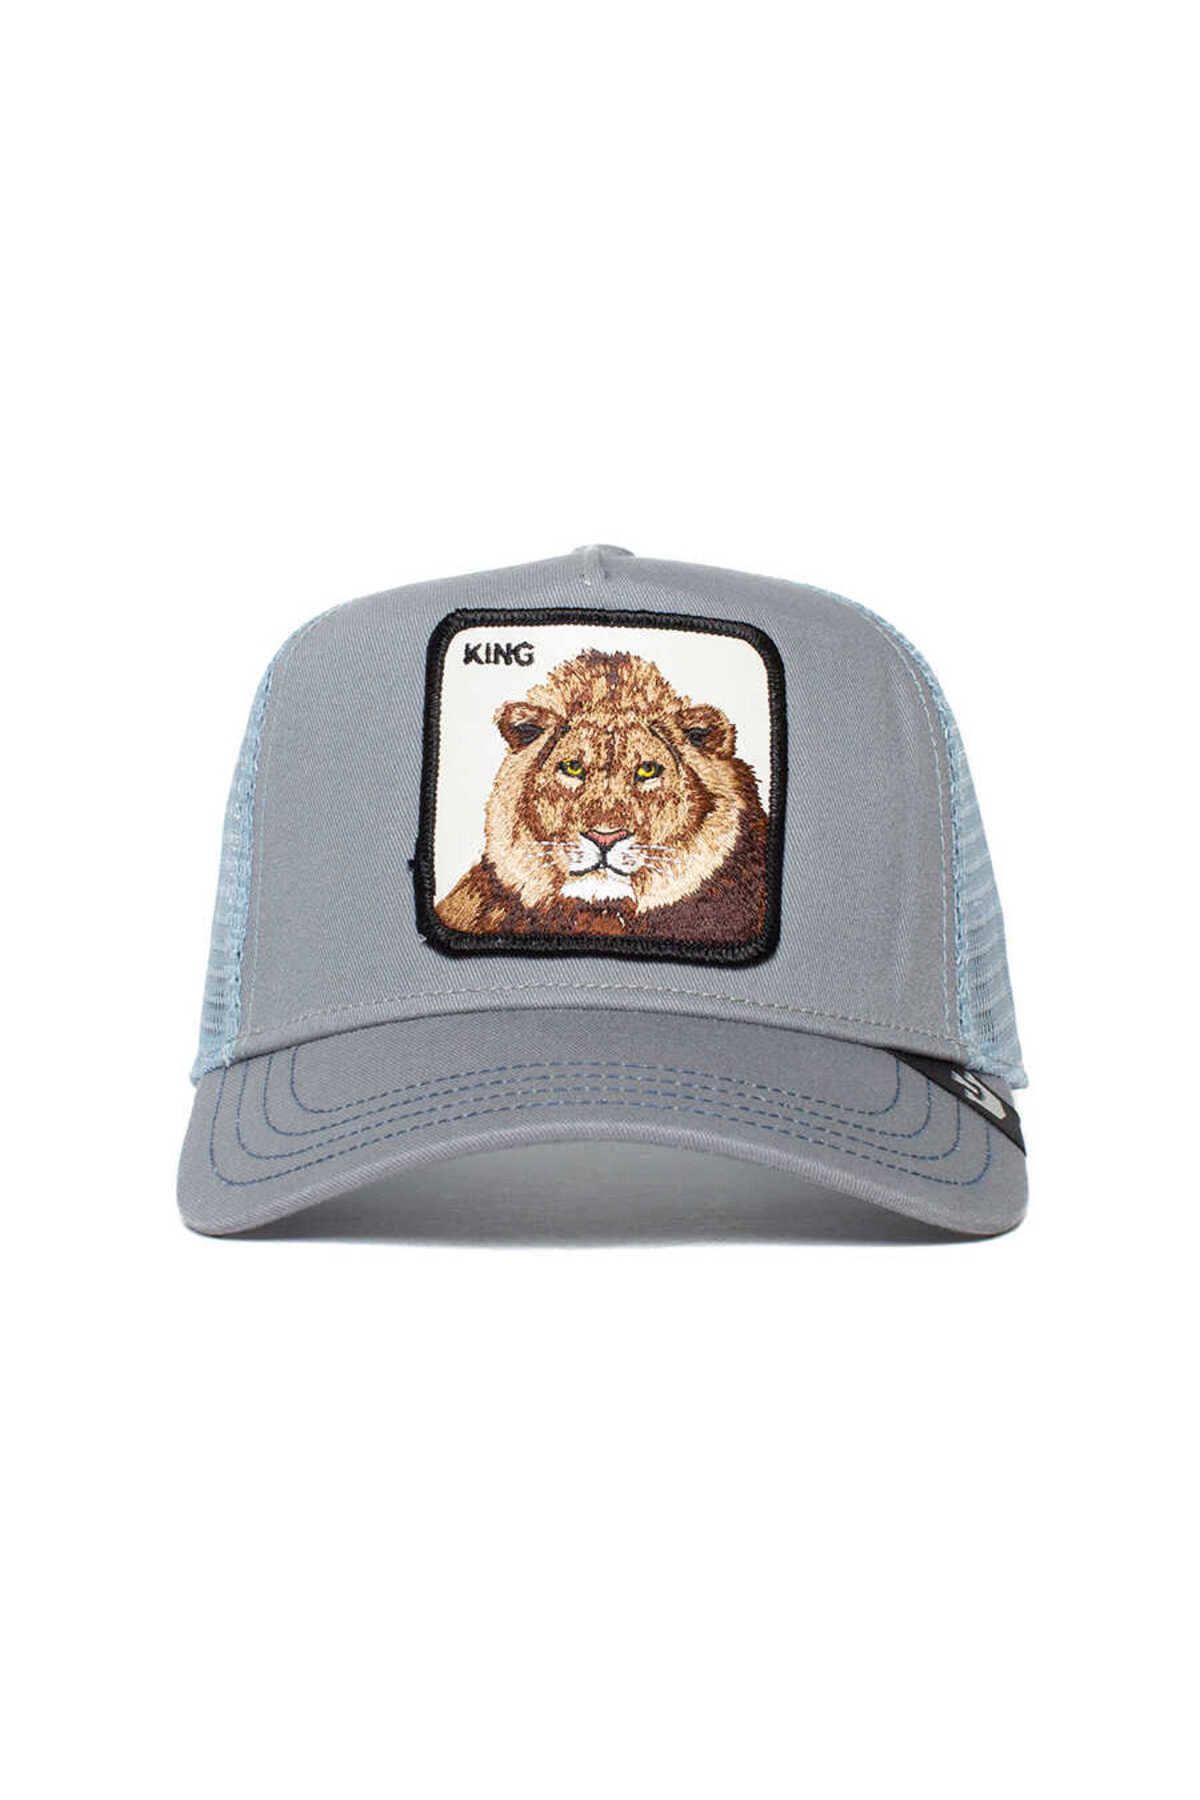 Goorin Bros . The King Lion ( Aslan Figürlü) Şapka101-0388 Kahverengi Standart